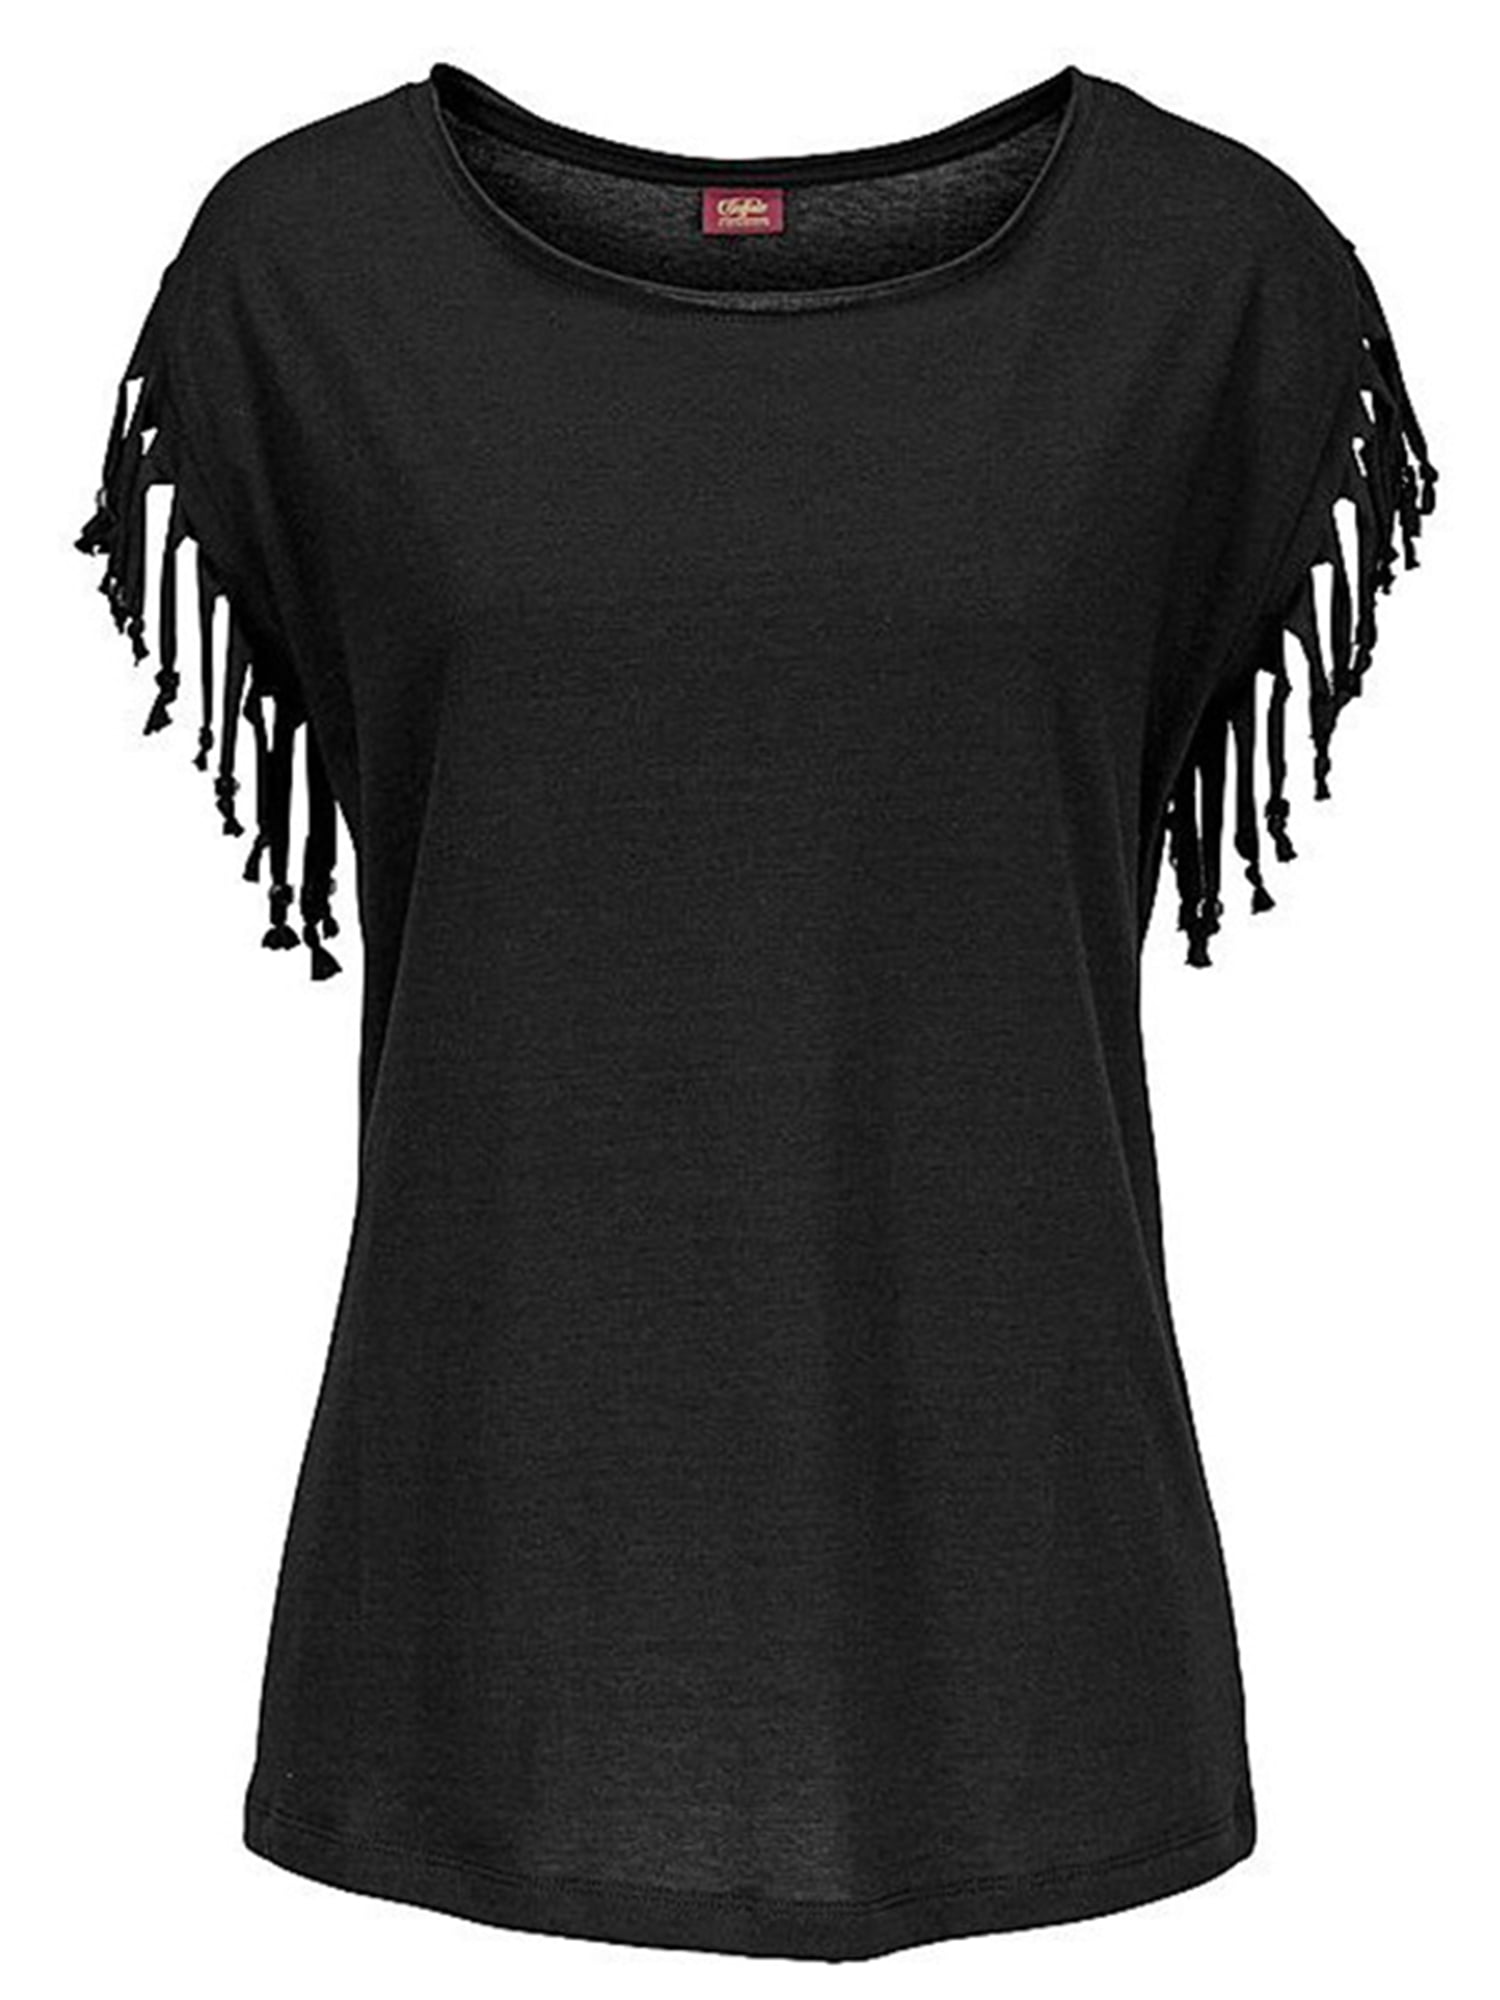 Wholesale Lots Women's One Size Long Sleeve Plain Round Neck Shirt NEW 10 PC 